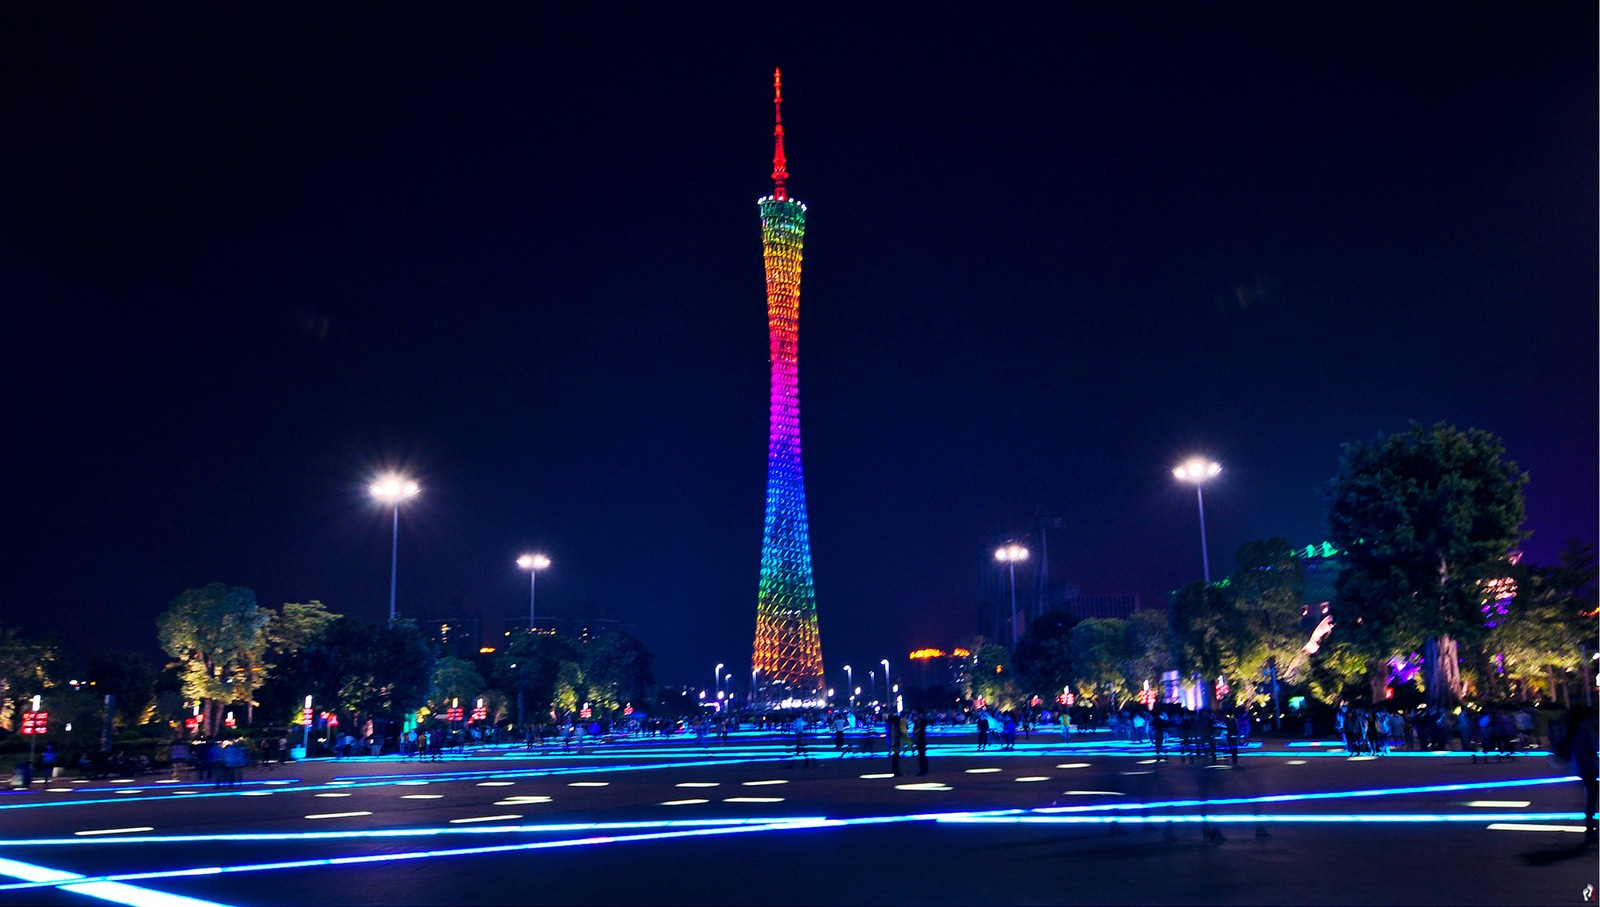 Guangzhou Flower City Square - LED brick light - Shone Lighting